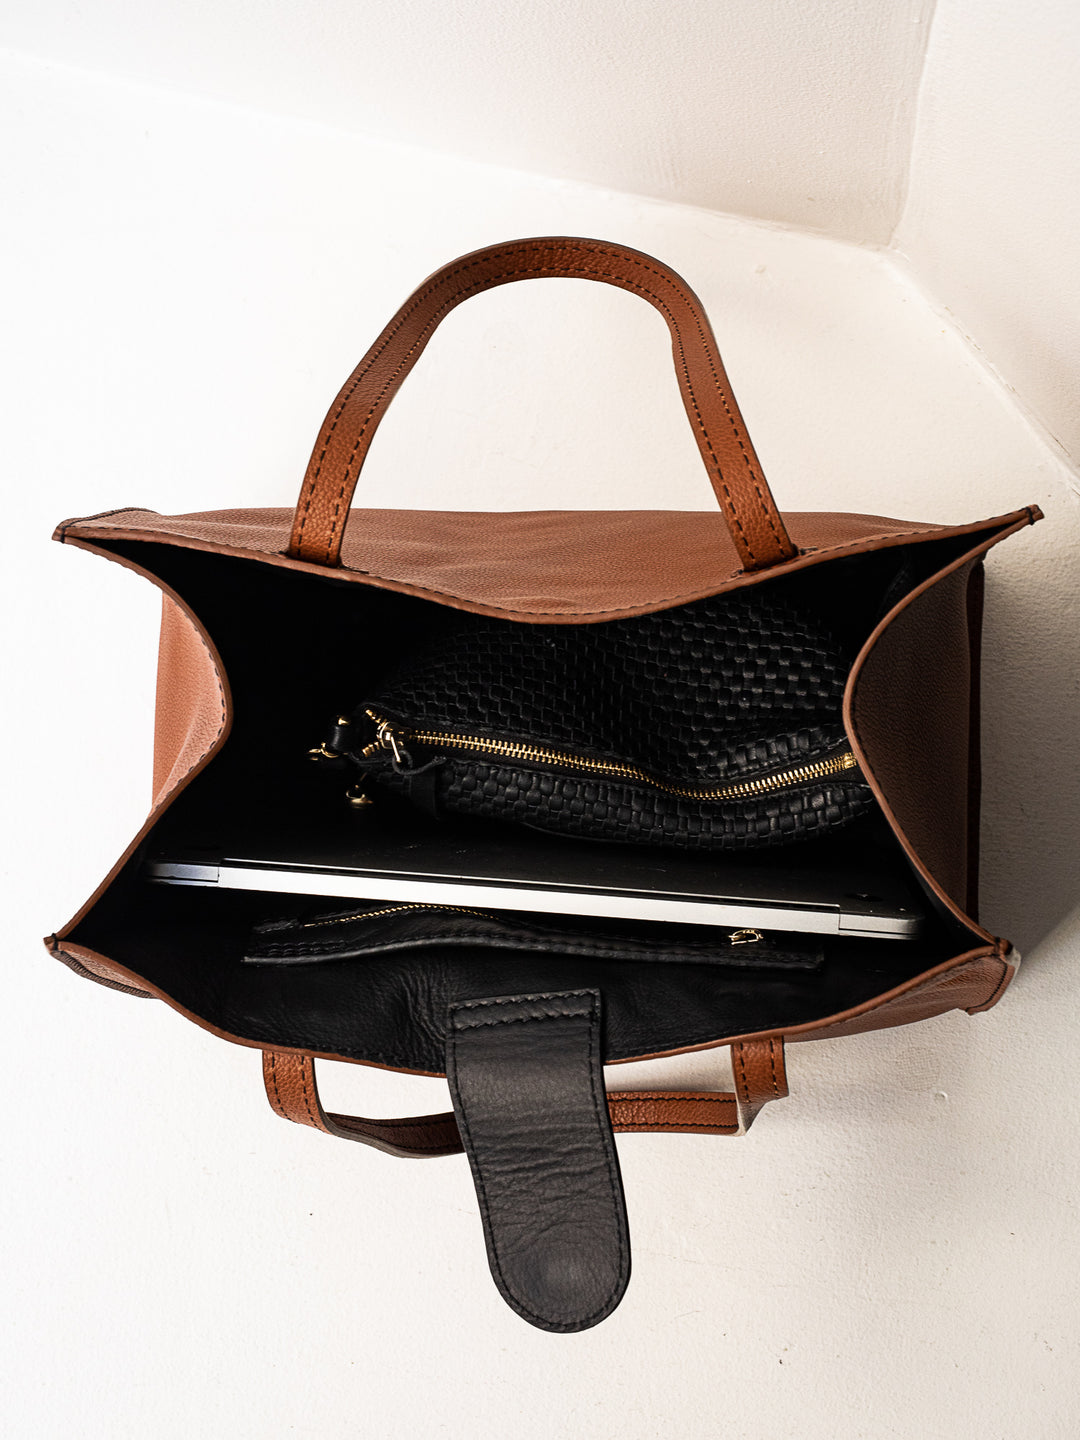 Blankens The Martha Caramel leather bag